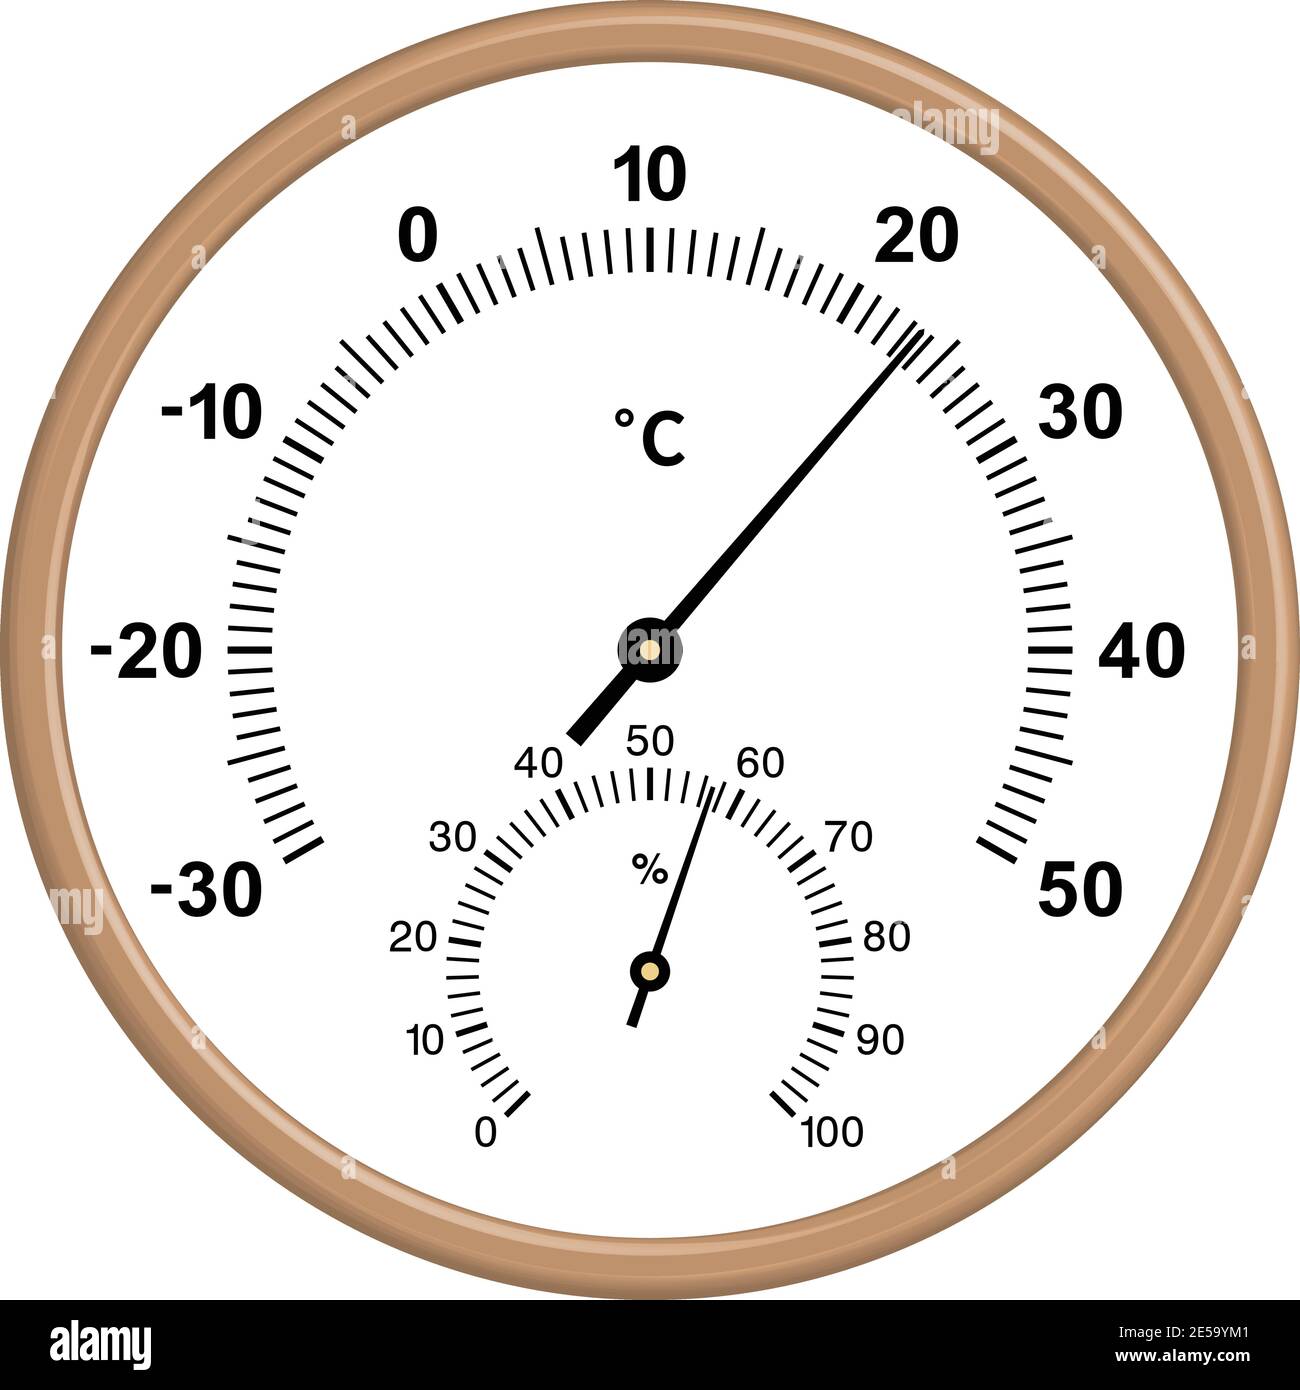 https://c8.alamy.com/comp/2E59YM1/dial-thermometer-hygrometer-measuring-tools-vector-illustration-2E59YM1.jpg